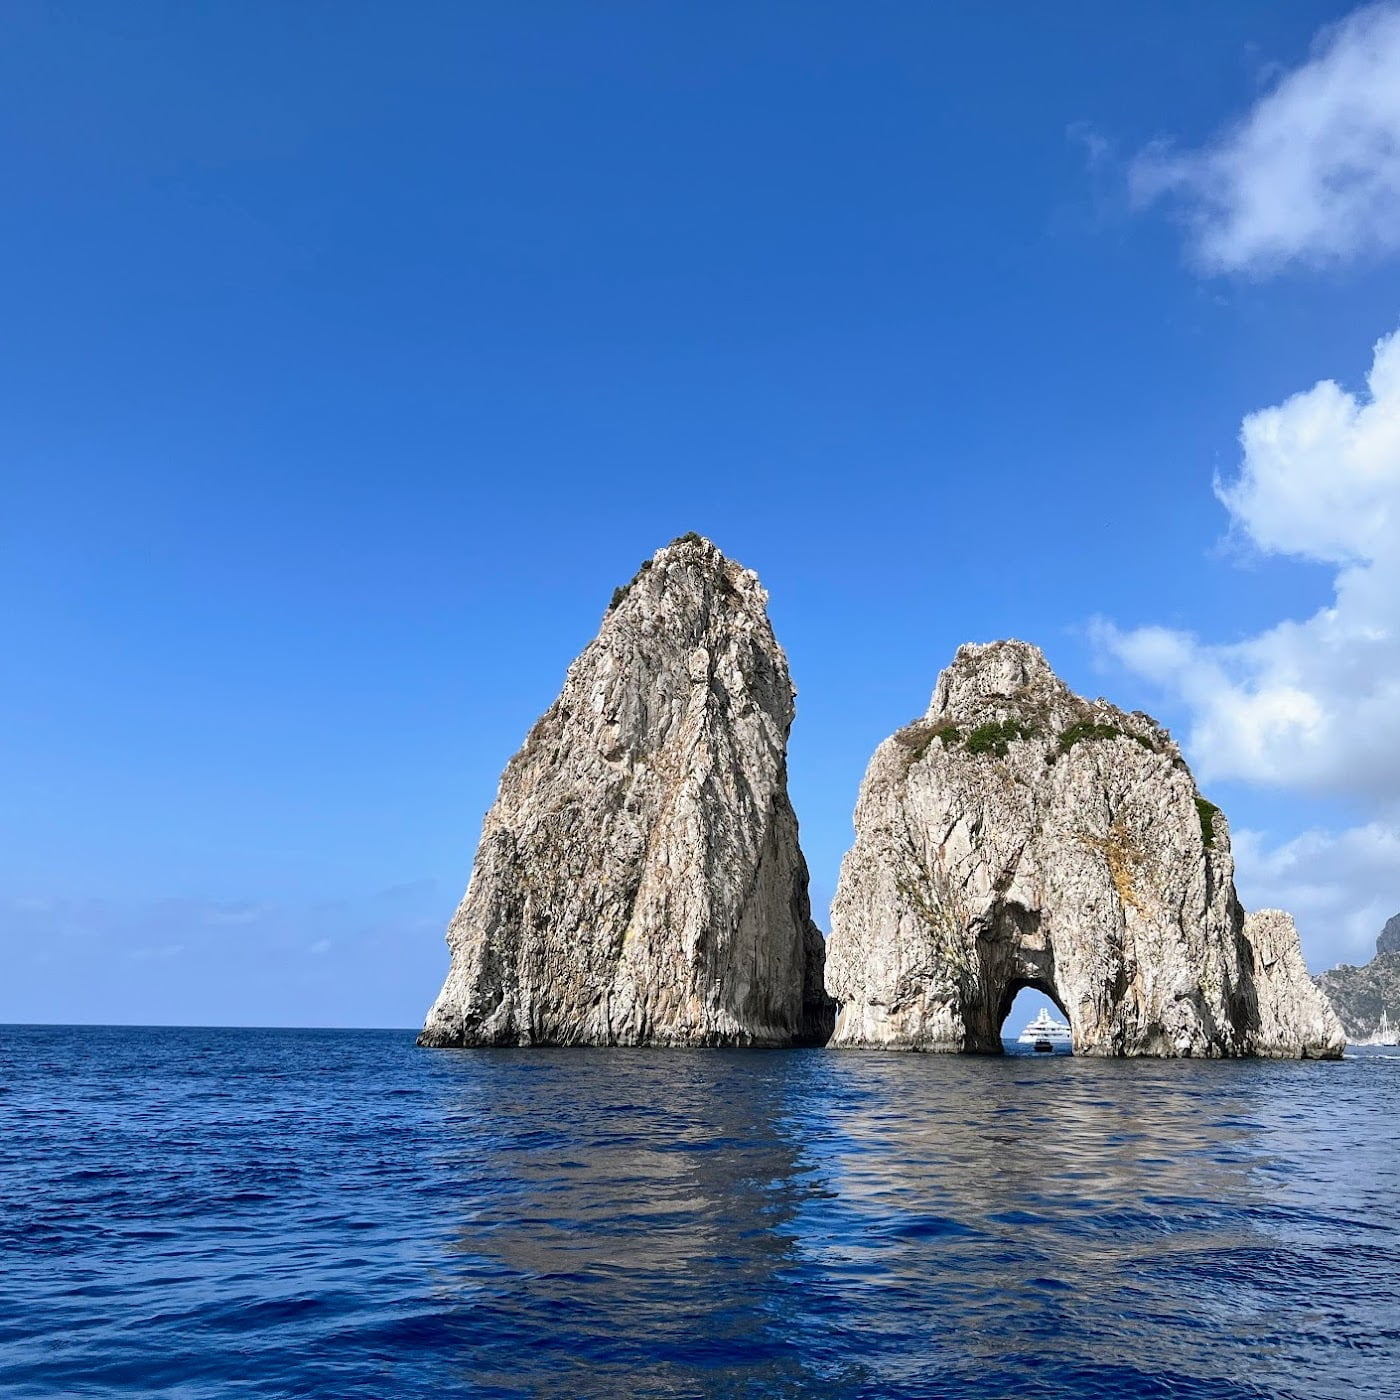 Capri rocks iconic